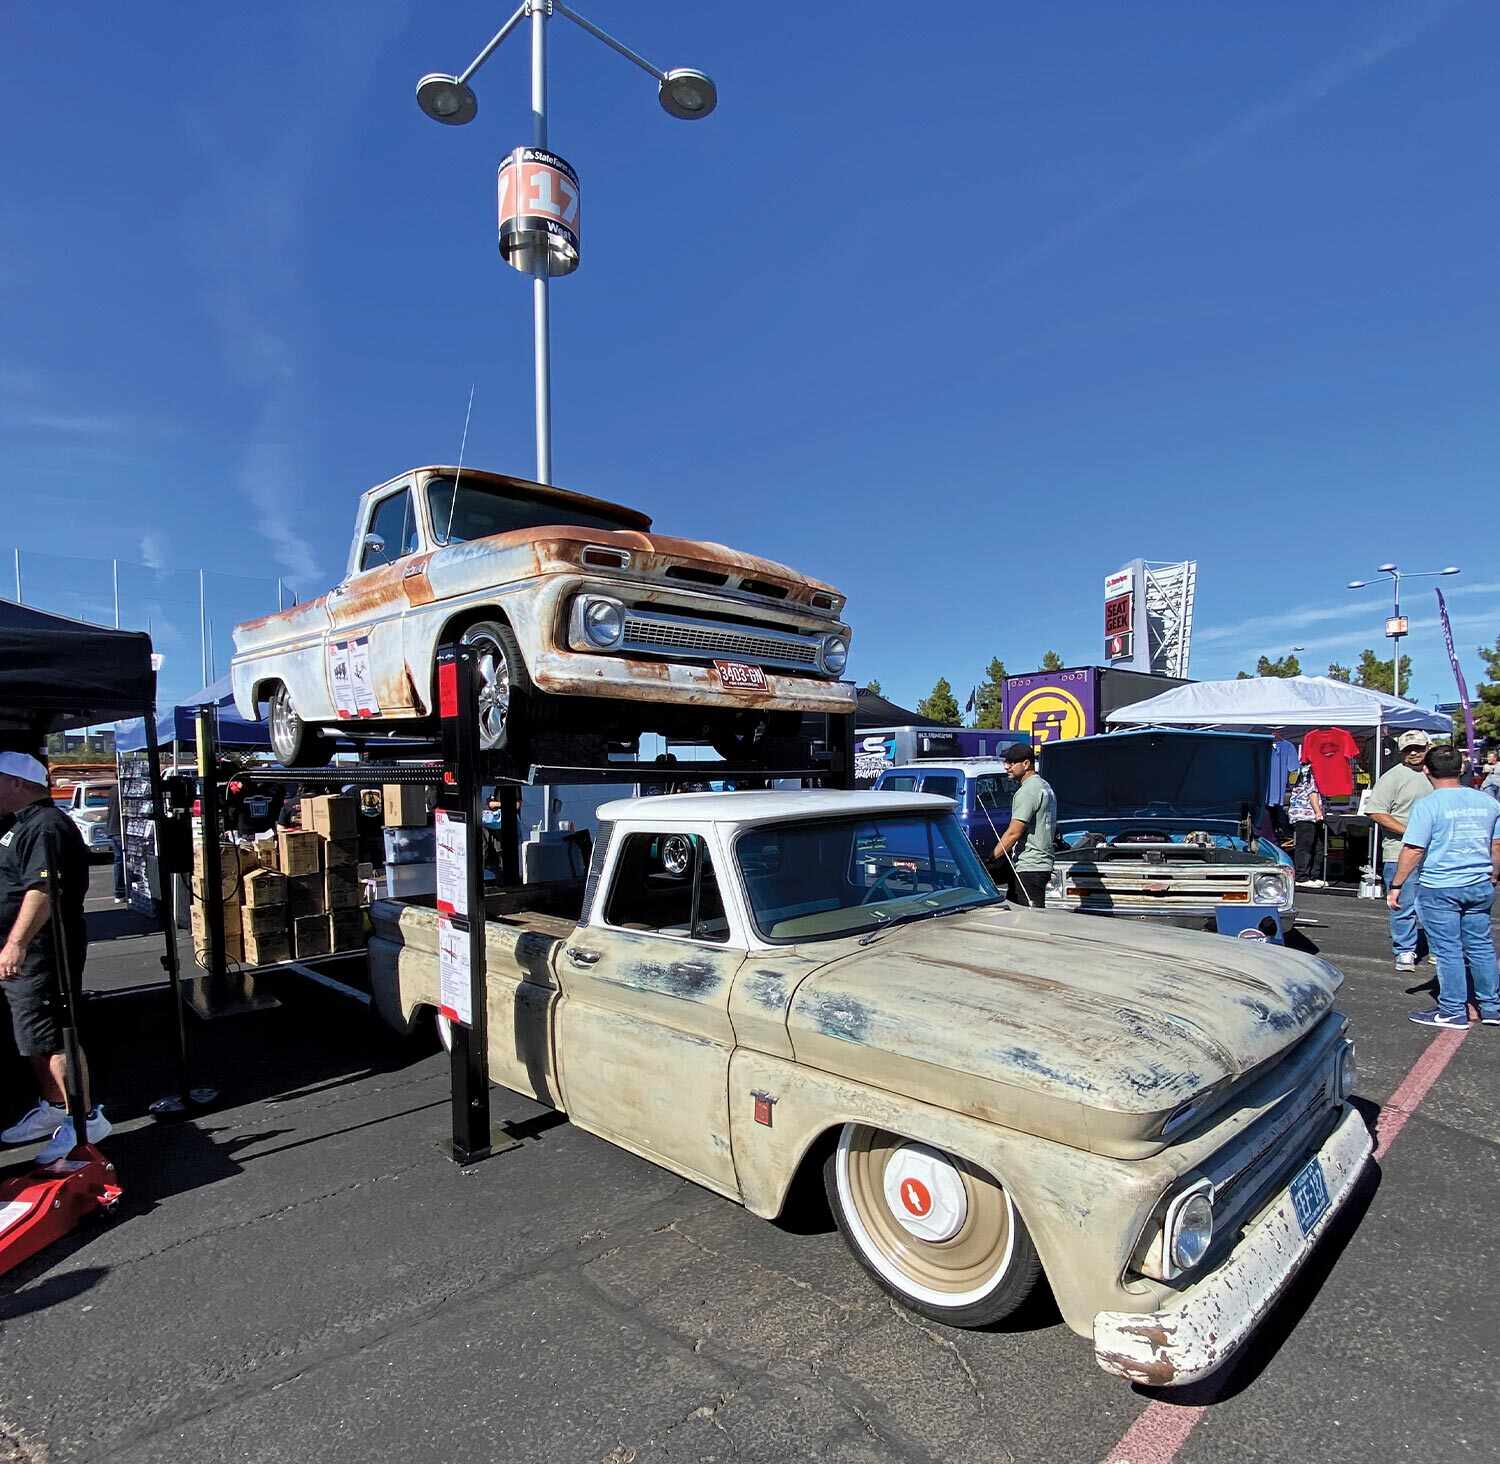 two patina worn classic trucks on display